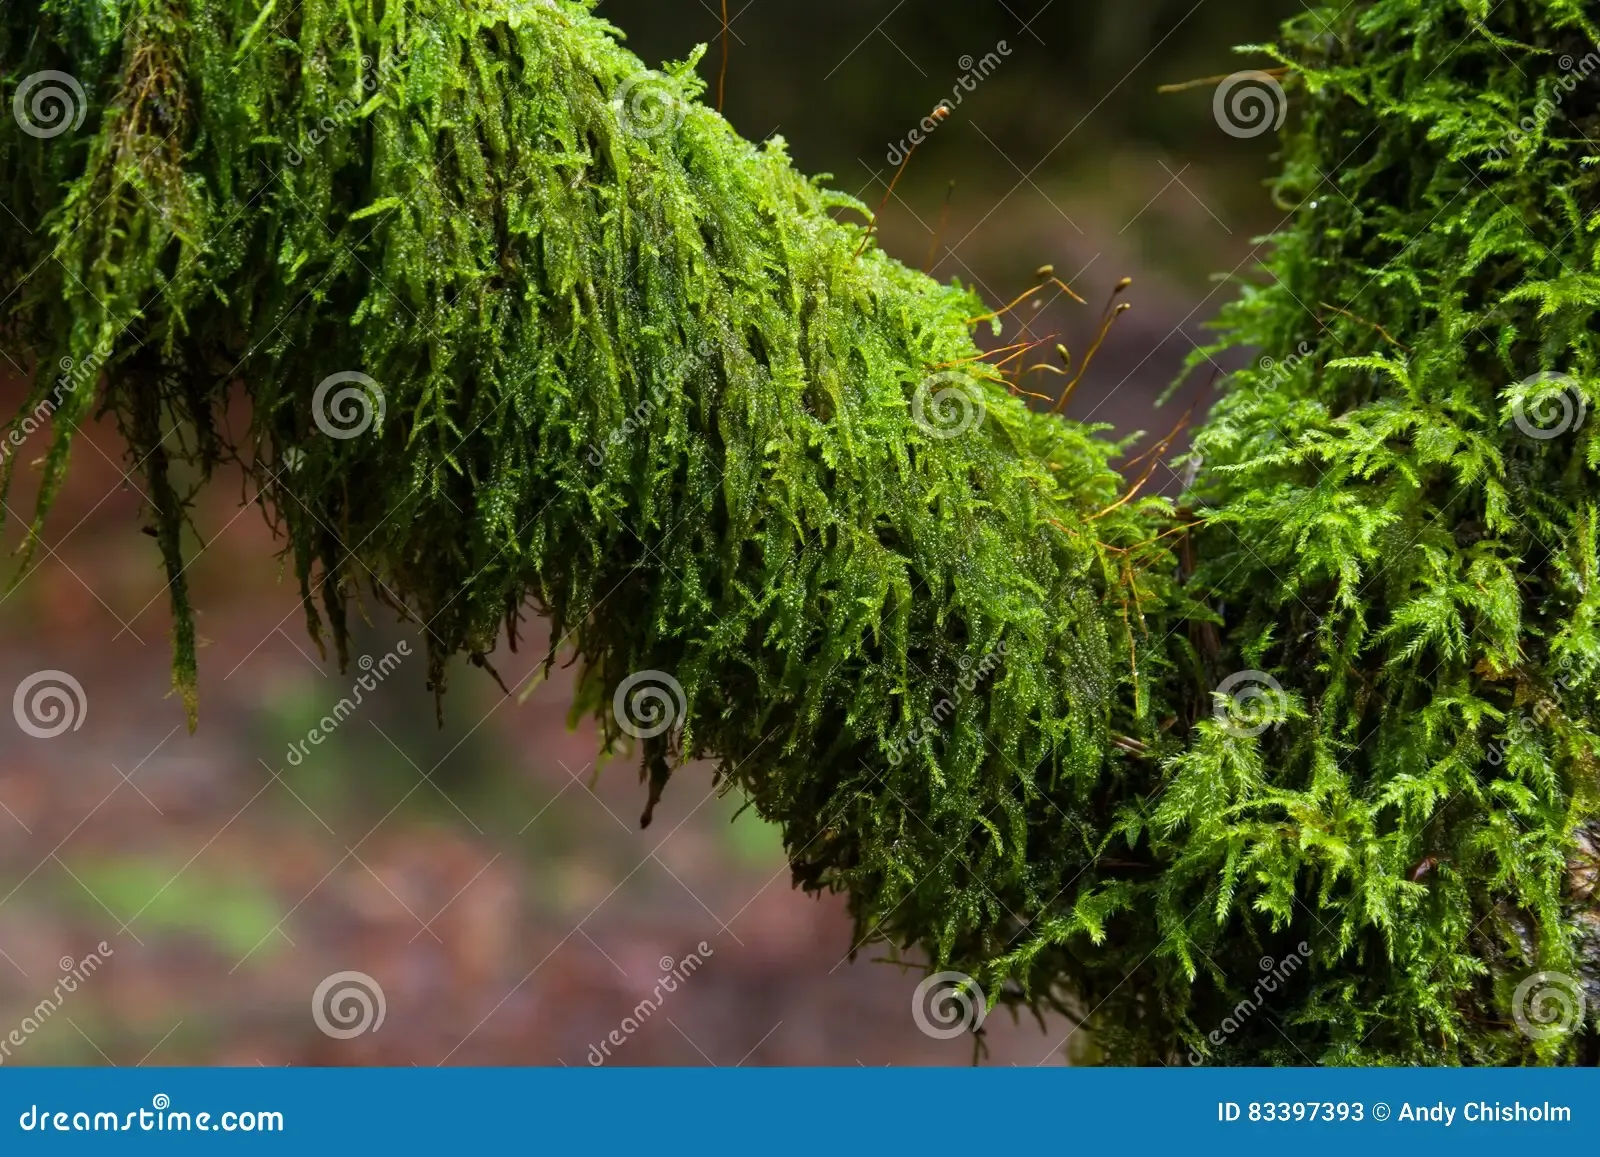 amblystegium-serpens-creeping-feathermoss-branch-tree-feather-moss-83397393.jpg